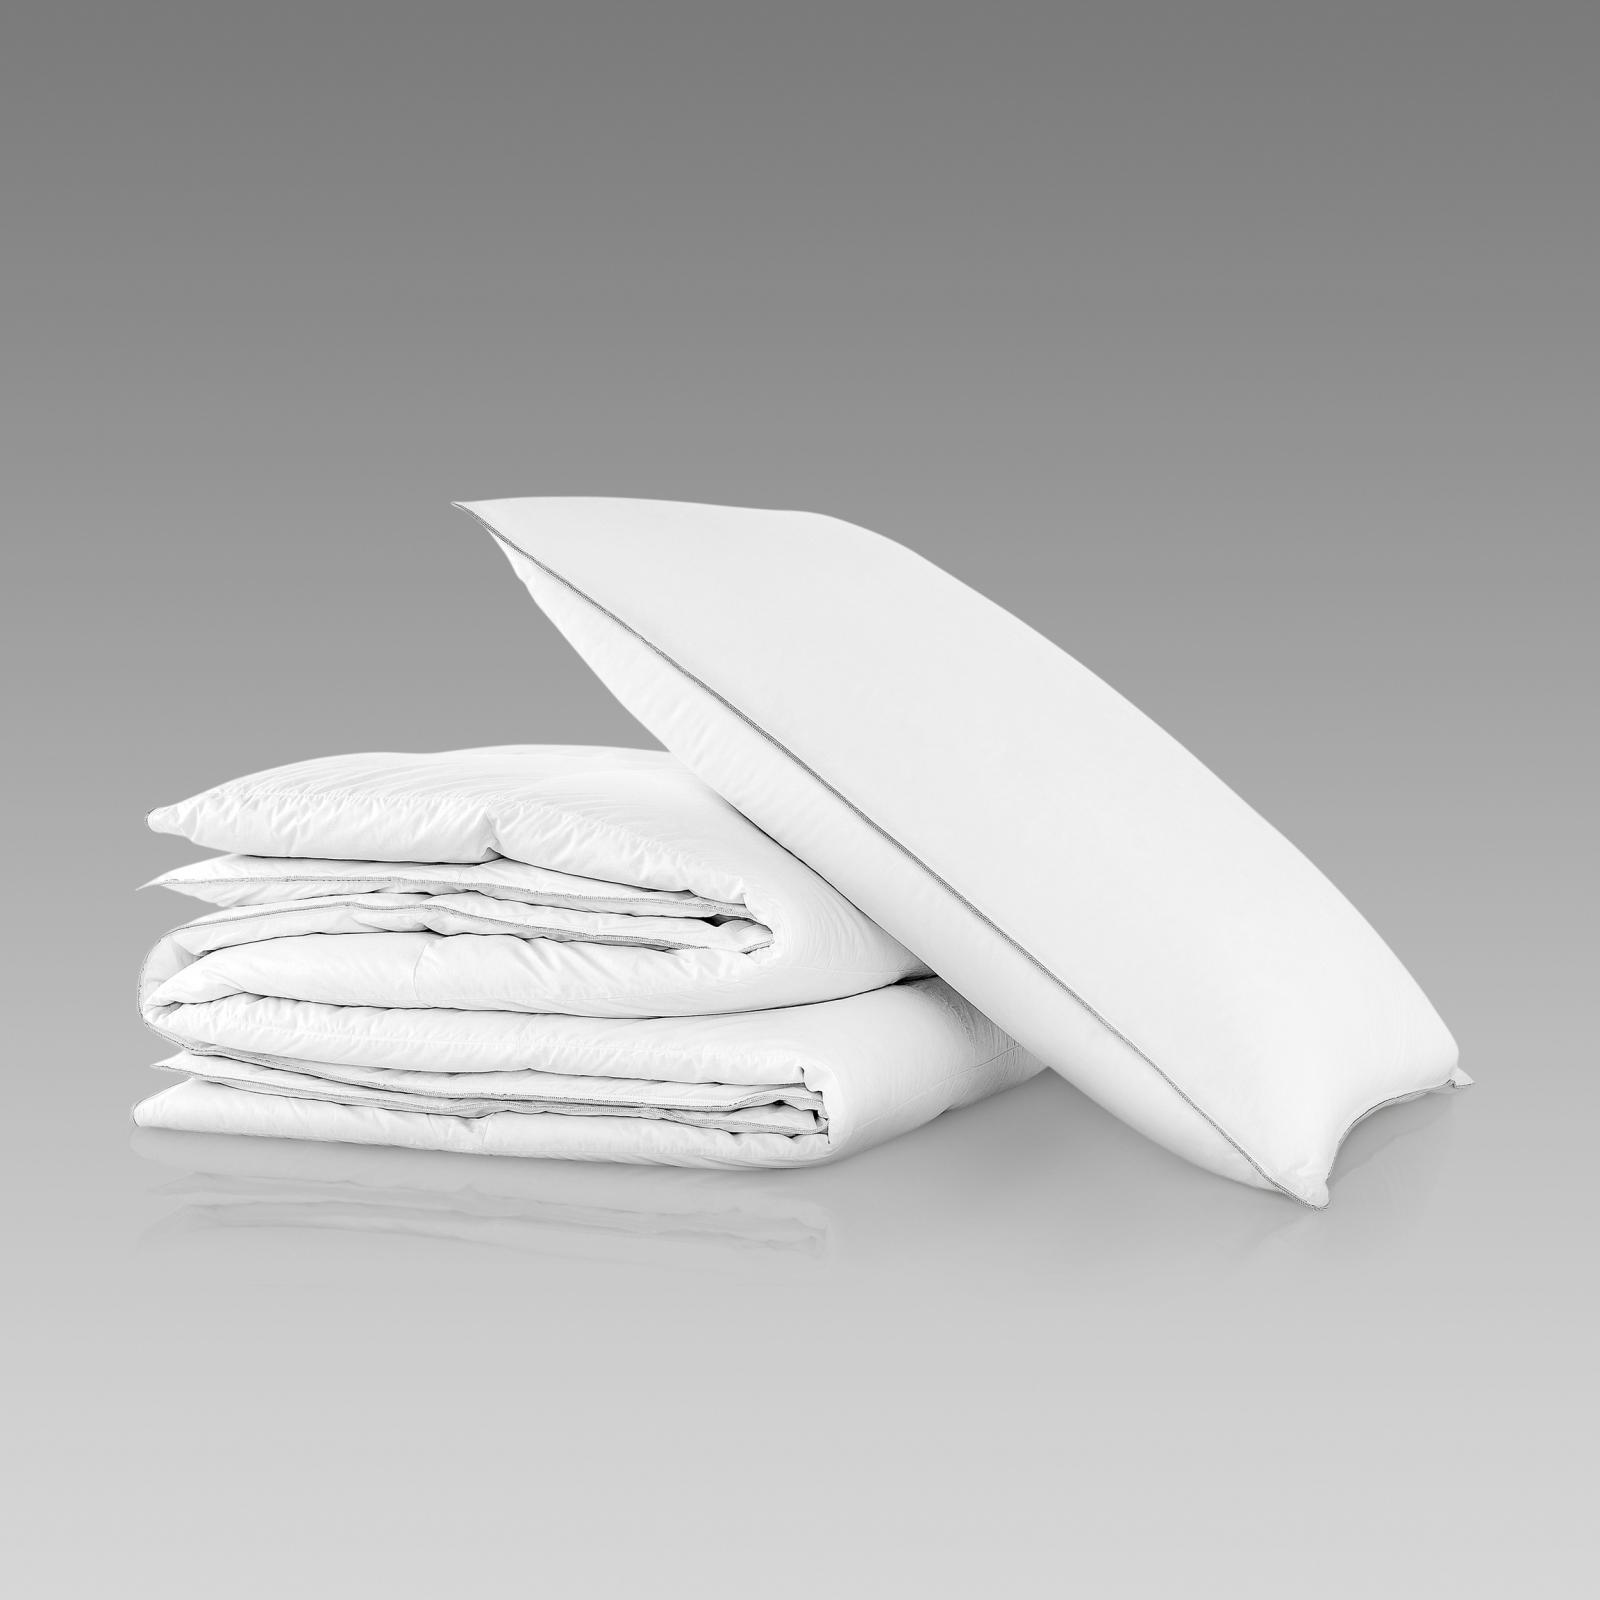 Одеяло Кайзер (20.04.13.0051), цвет белый, размер 200х210 см - фото 6